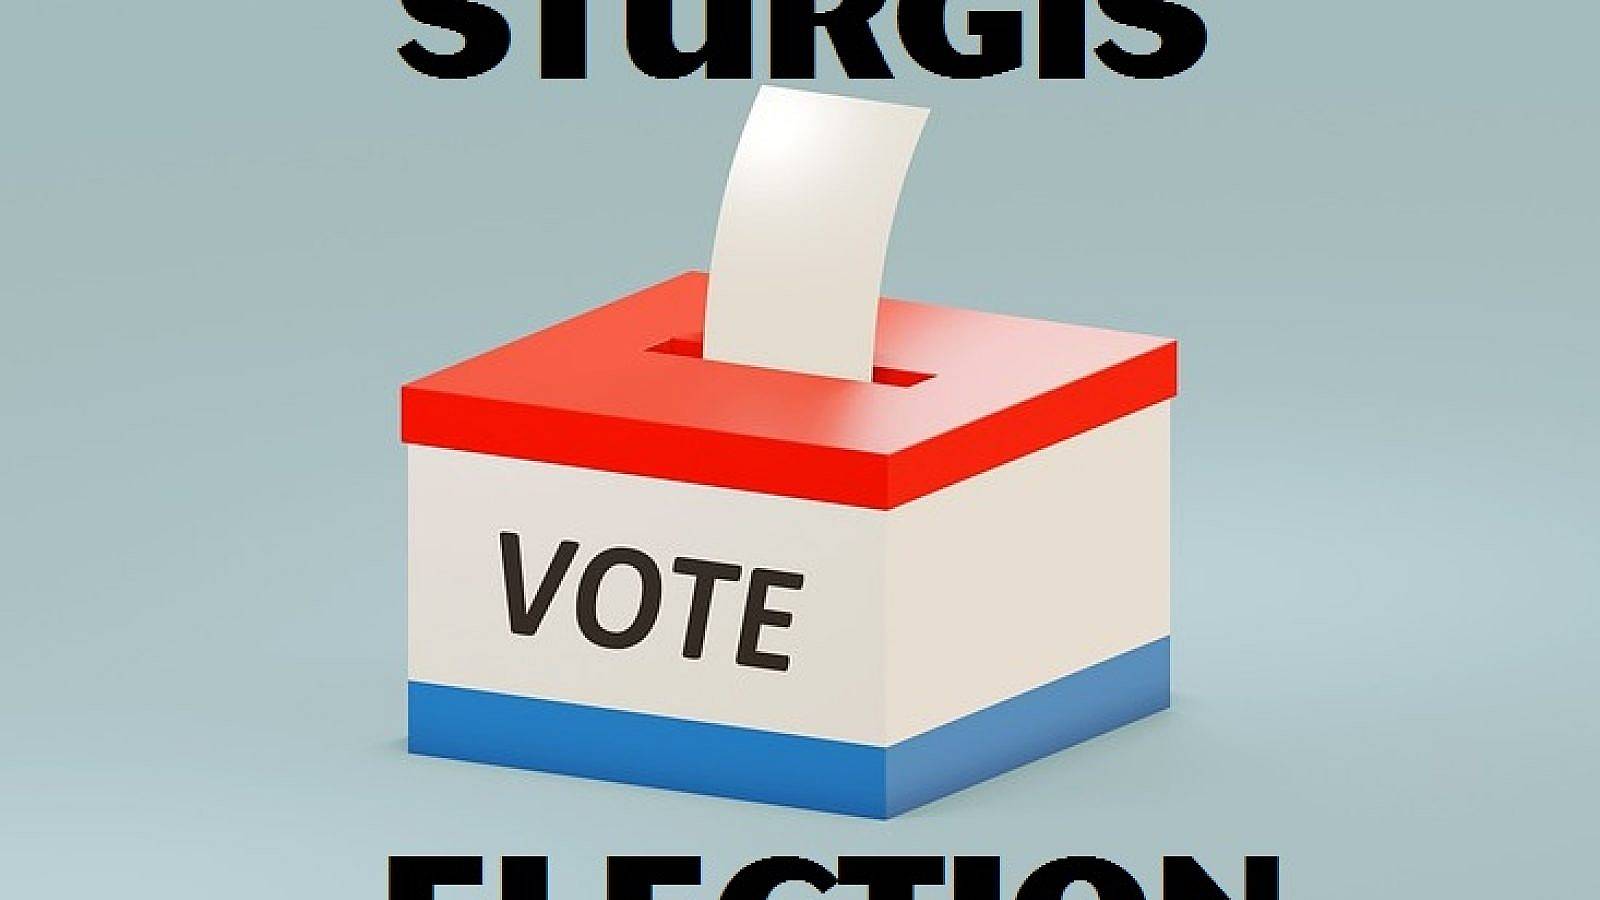 Sturgis Election Graphic